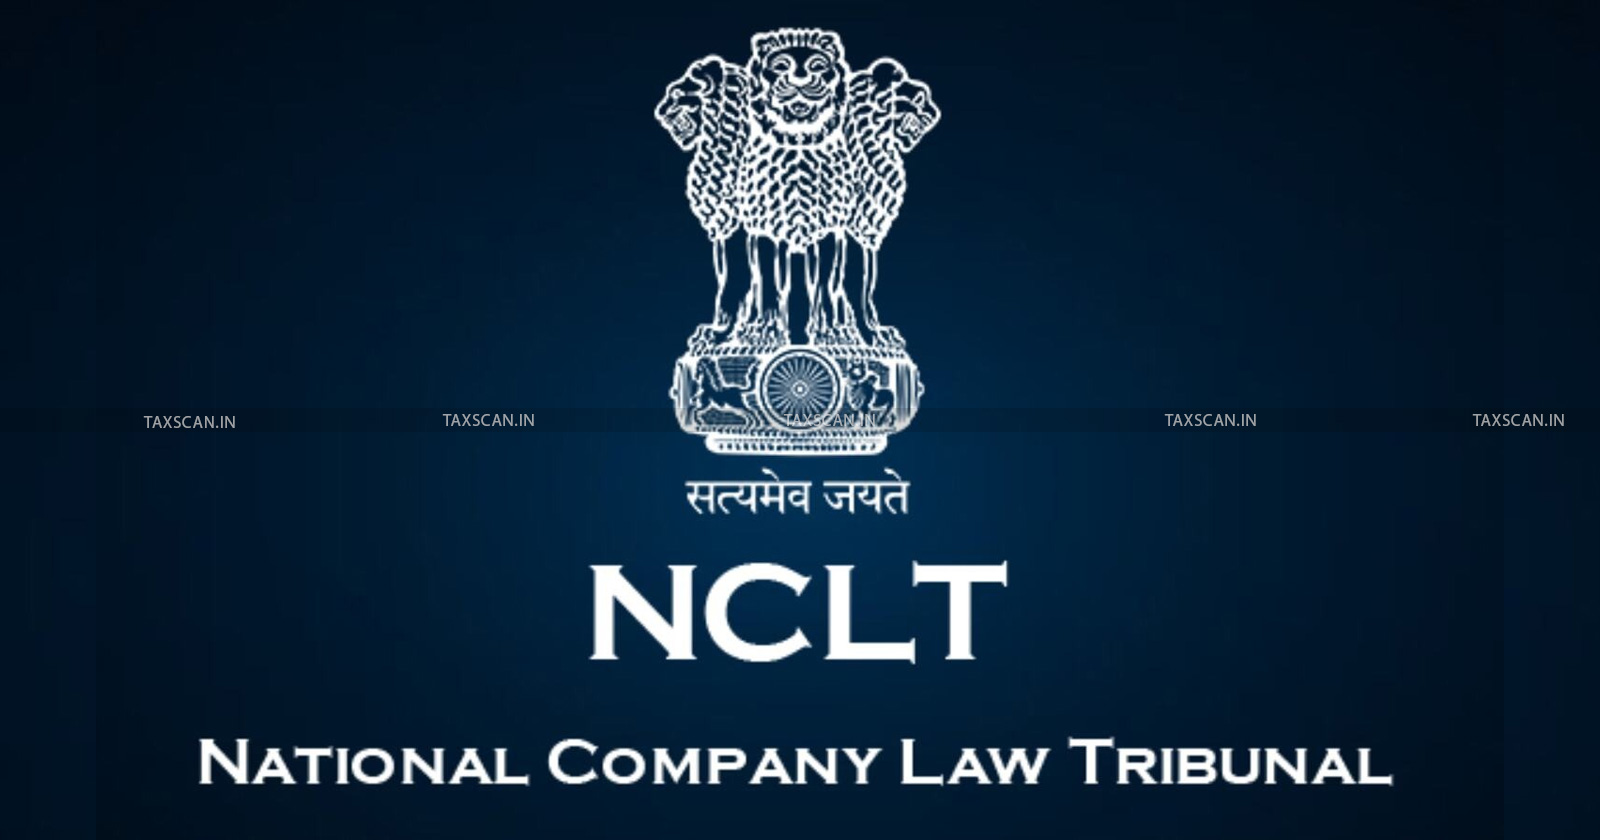 NCLT - IBC sections -companies laws - NCLT jurisdiction - Arbitral awards - TAXSCAN